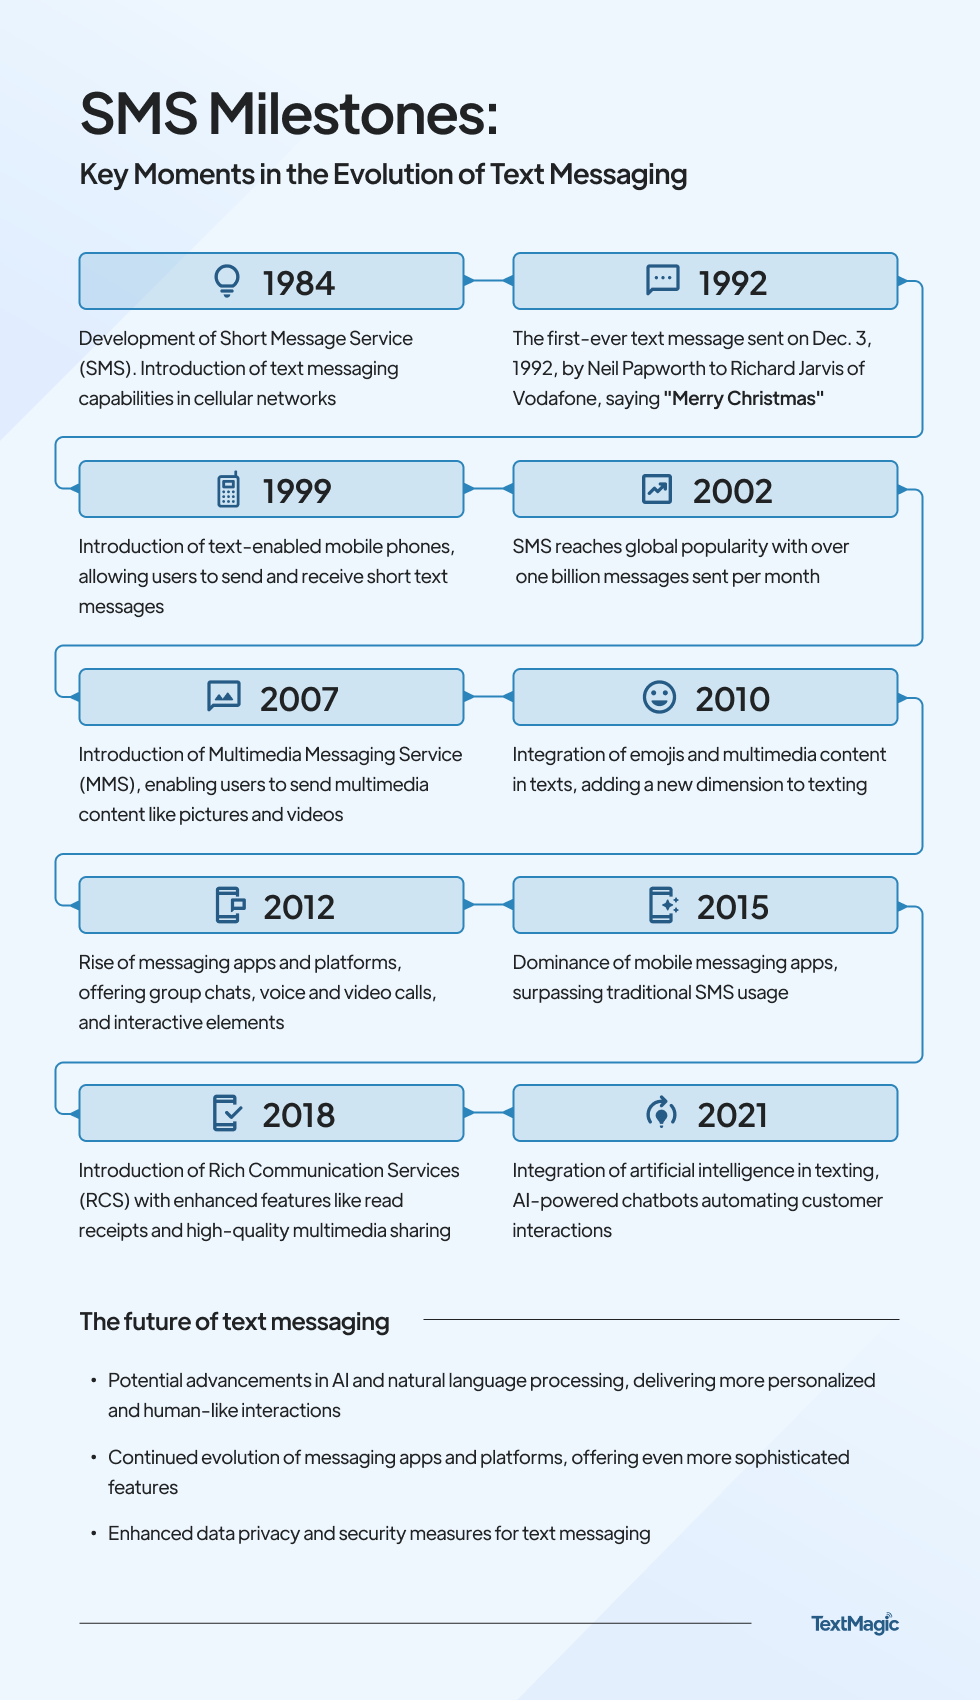 SMS Milestones - History of Texting infographic